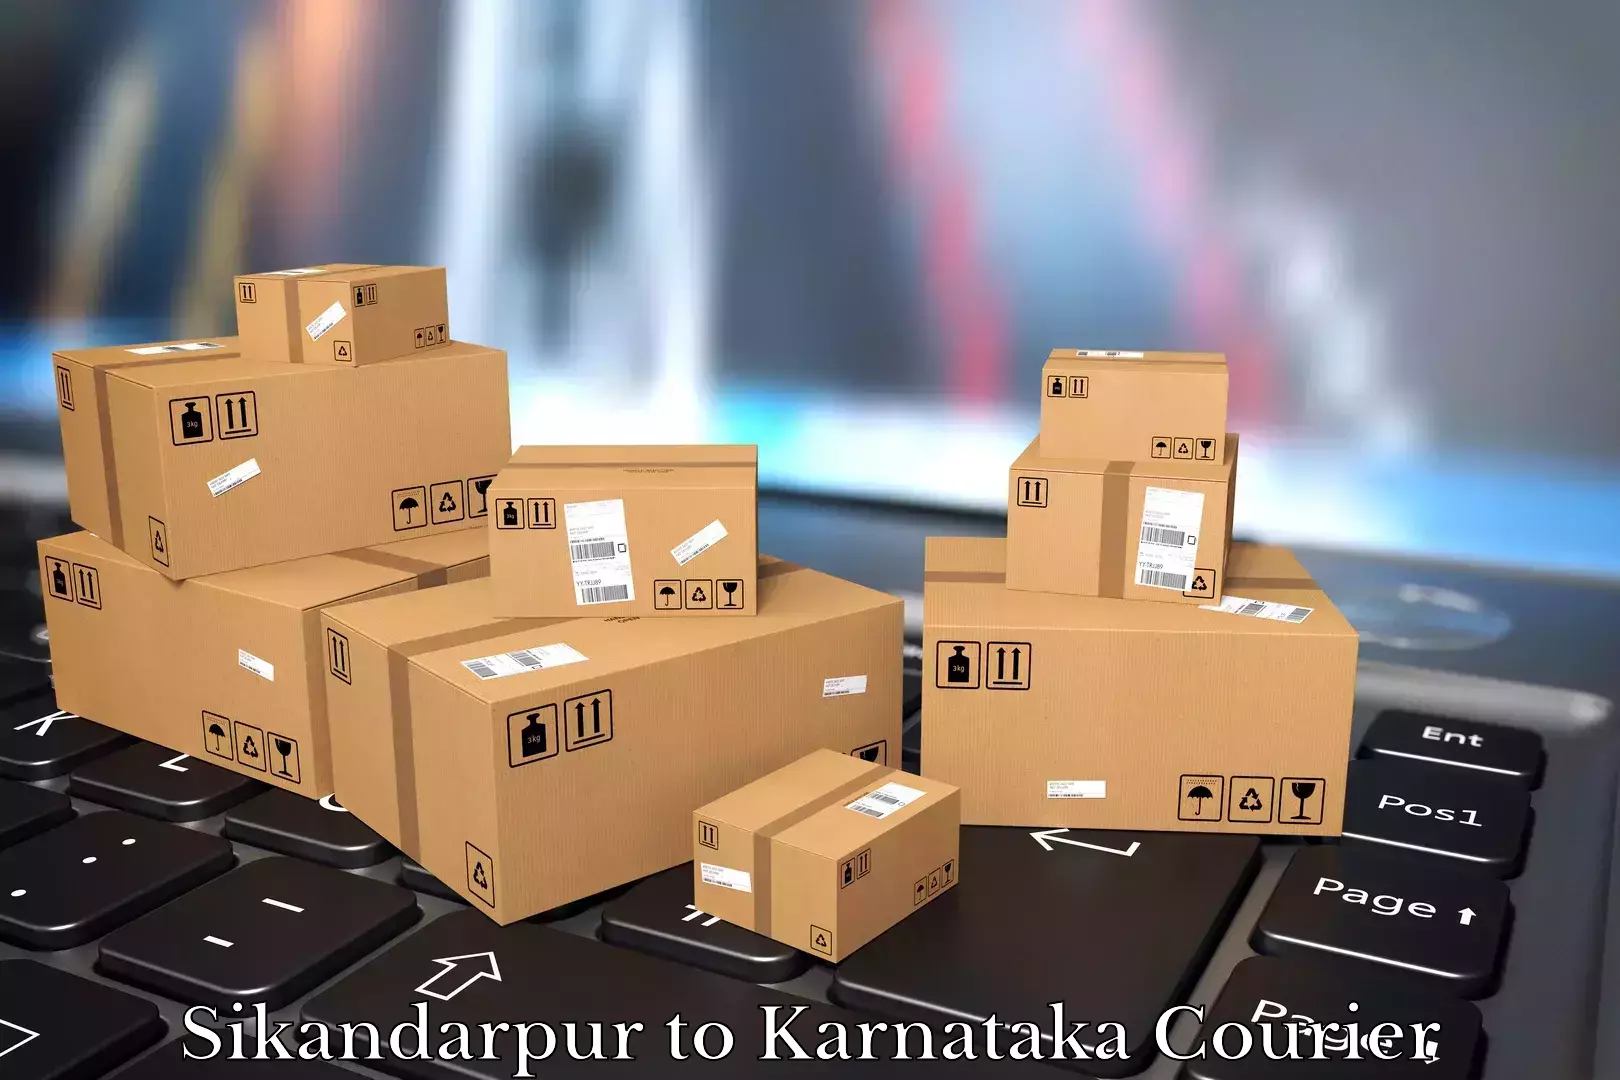 Moving service excellence Sikandarpur to Karnataka